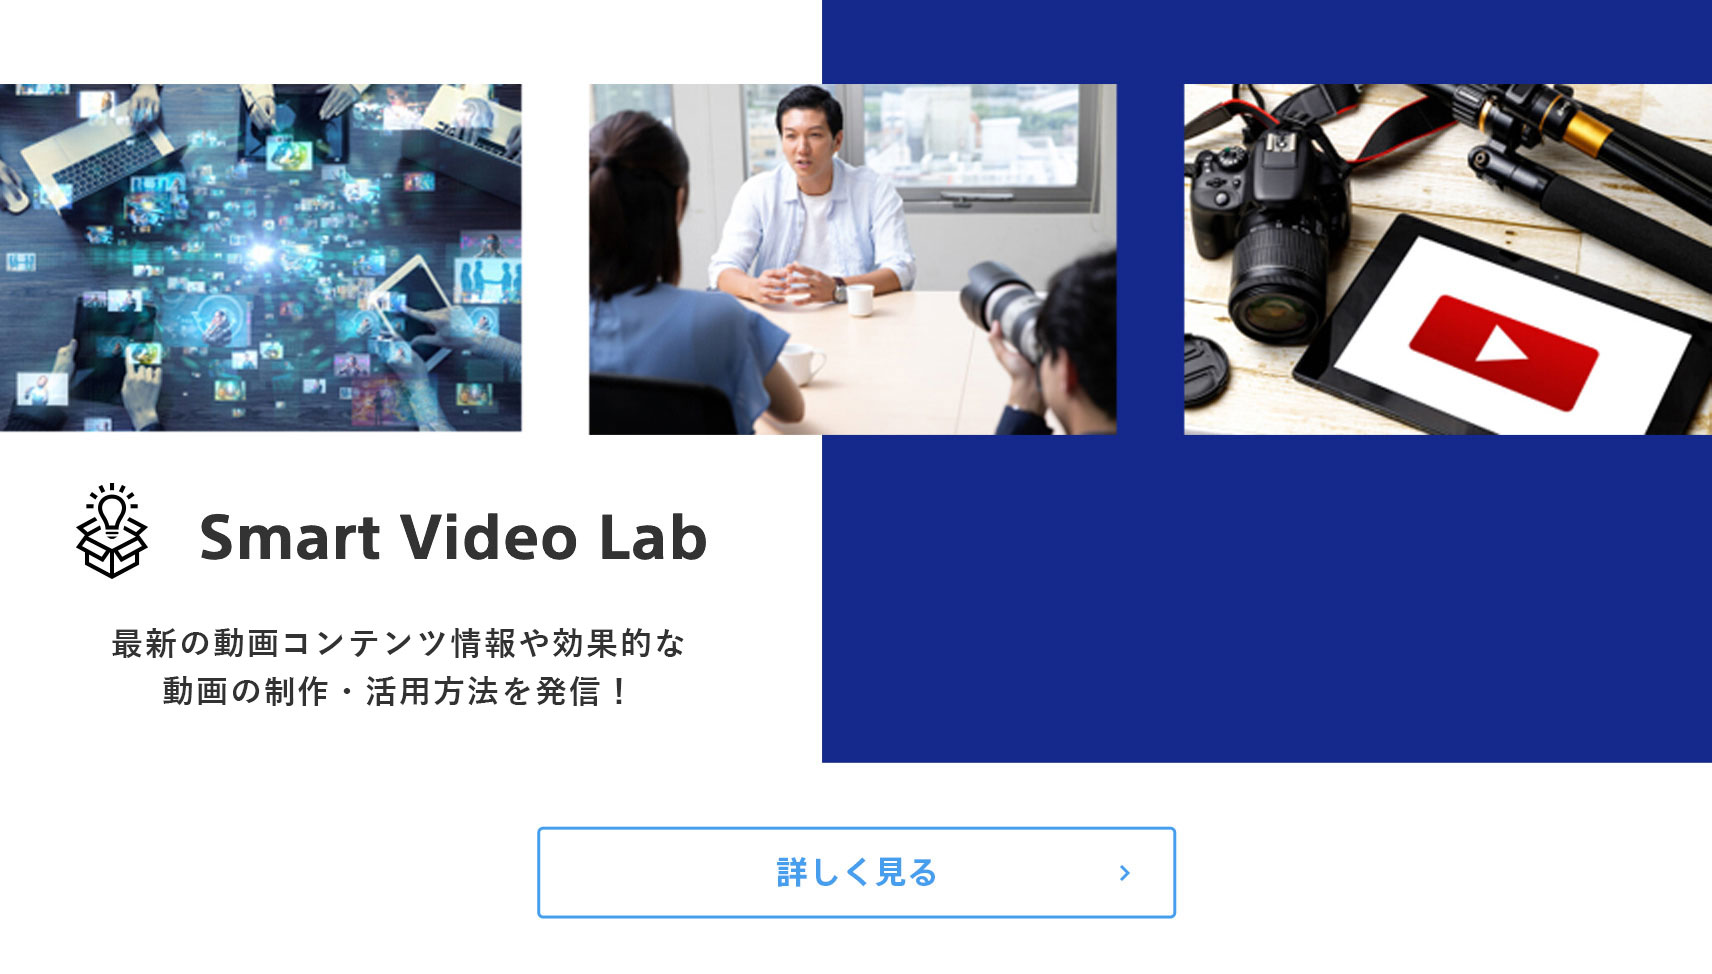 Smart Video Lab